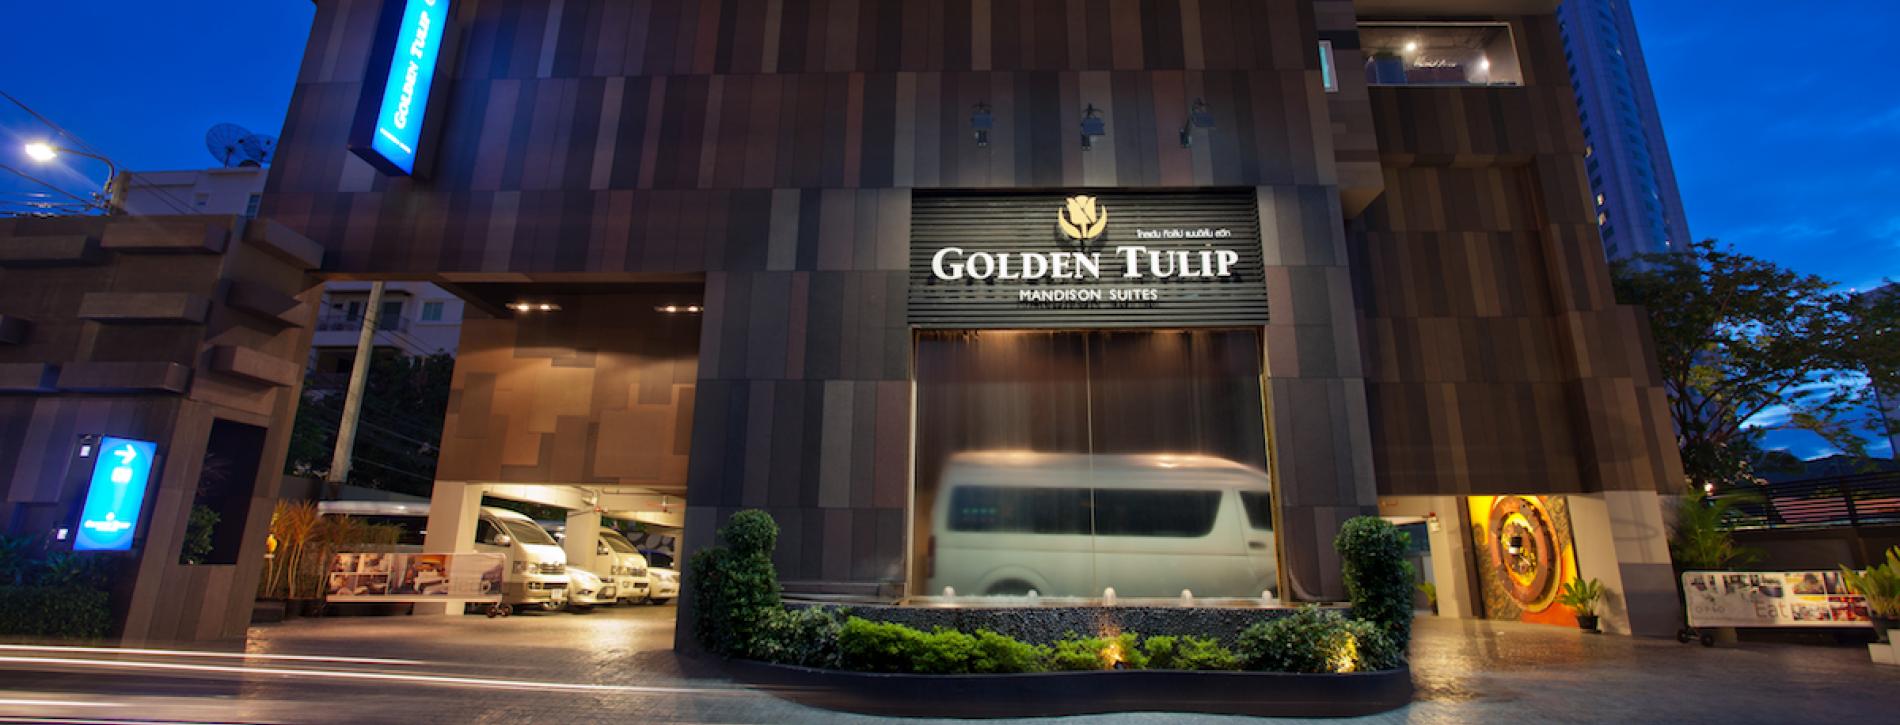 Vacation Hub International - VHI - Golden Tulip Mandison Suites